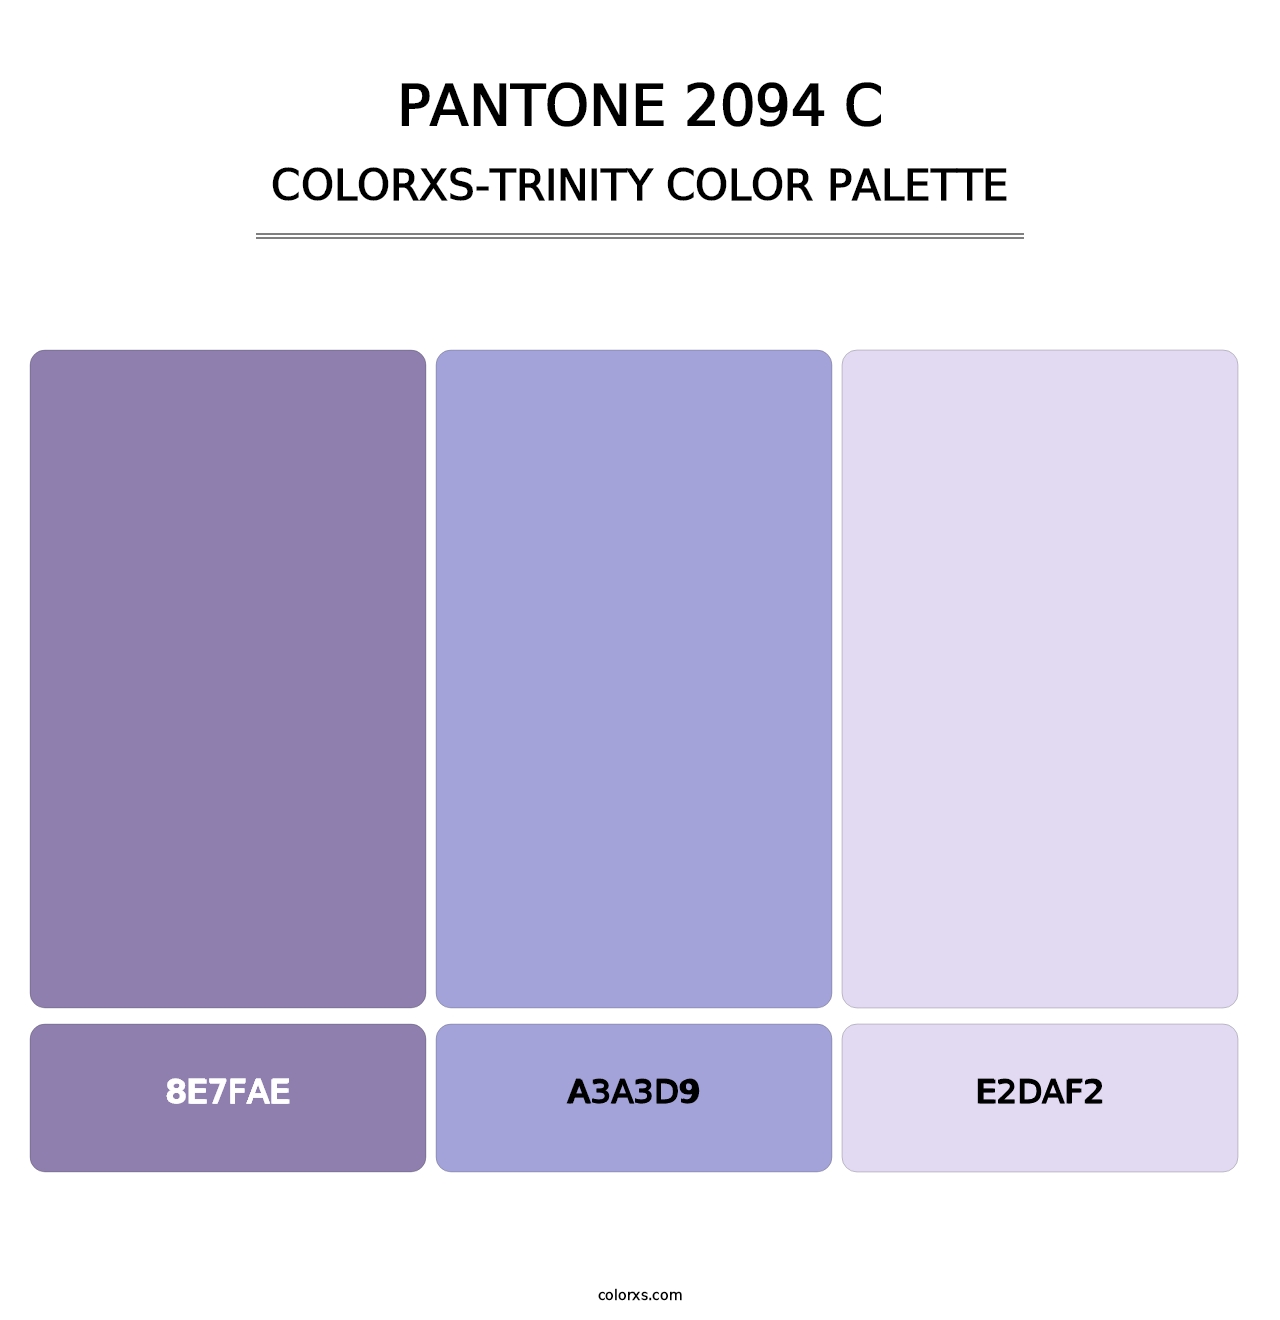 PANTONE 2094 C - Colorxs Trinity Palette